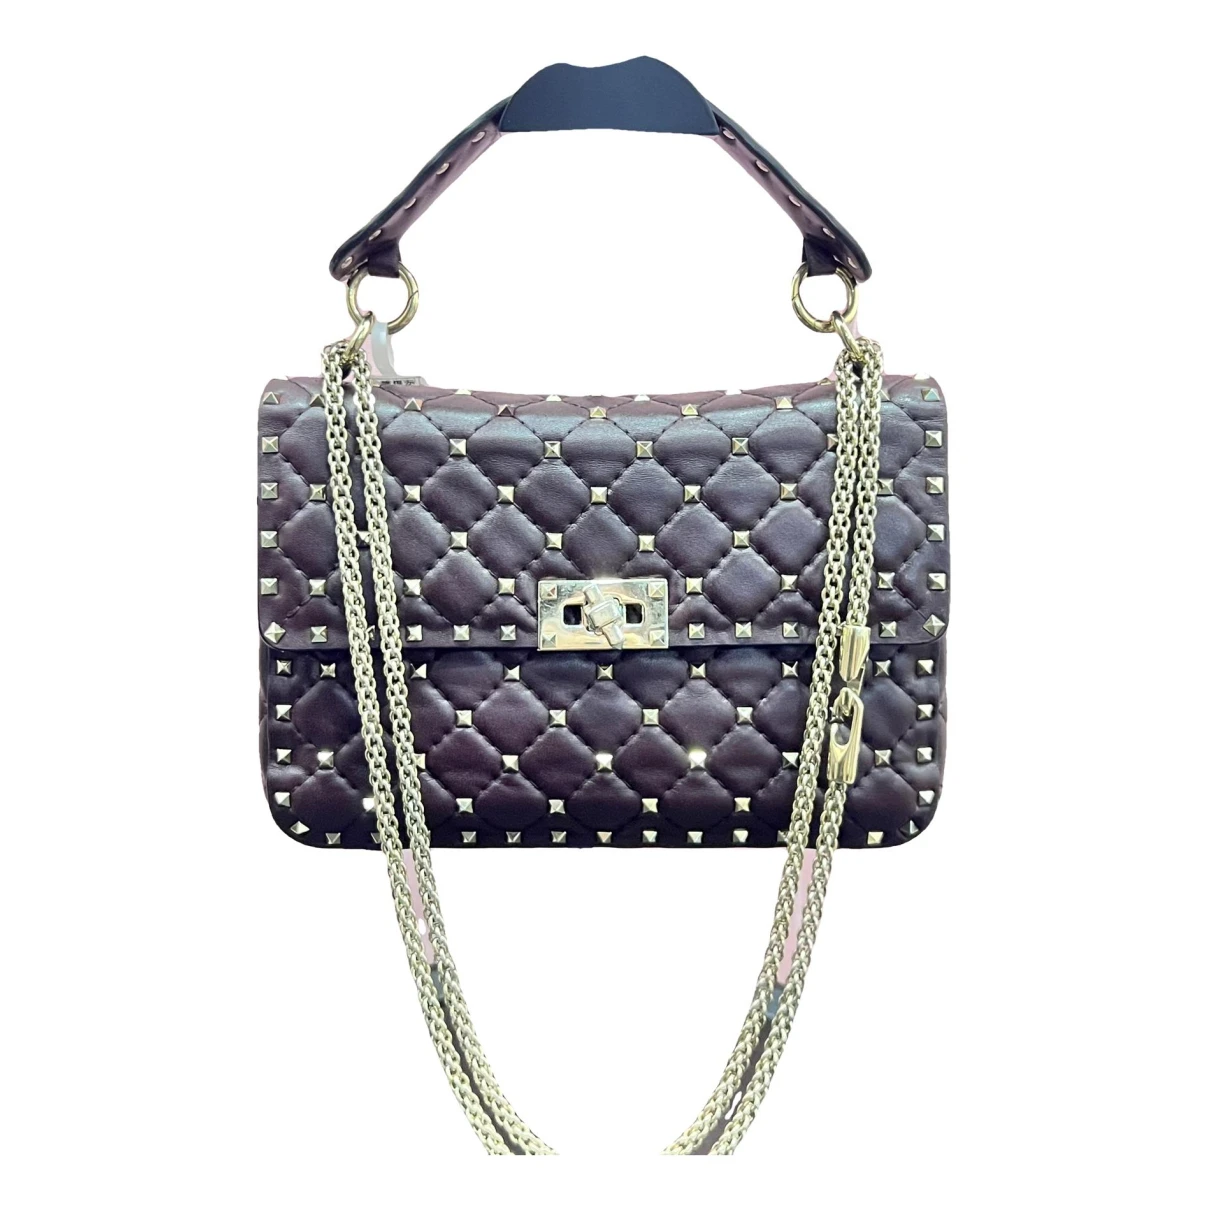 Pre-owned Valentino Garavani Rockstud Spike Leather Handbag In Burgundy